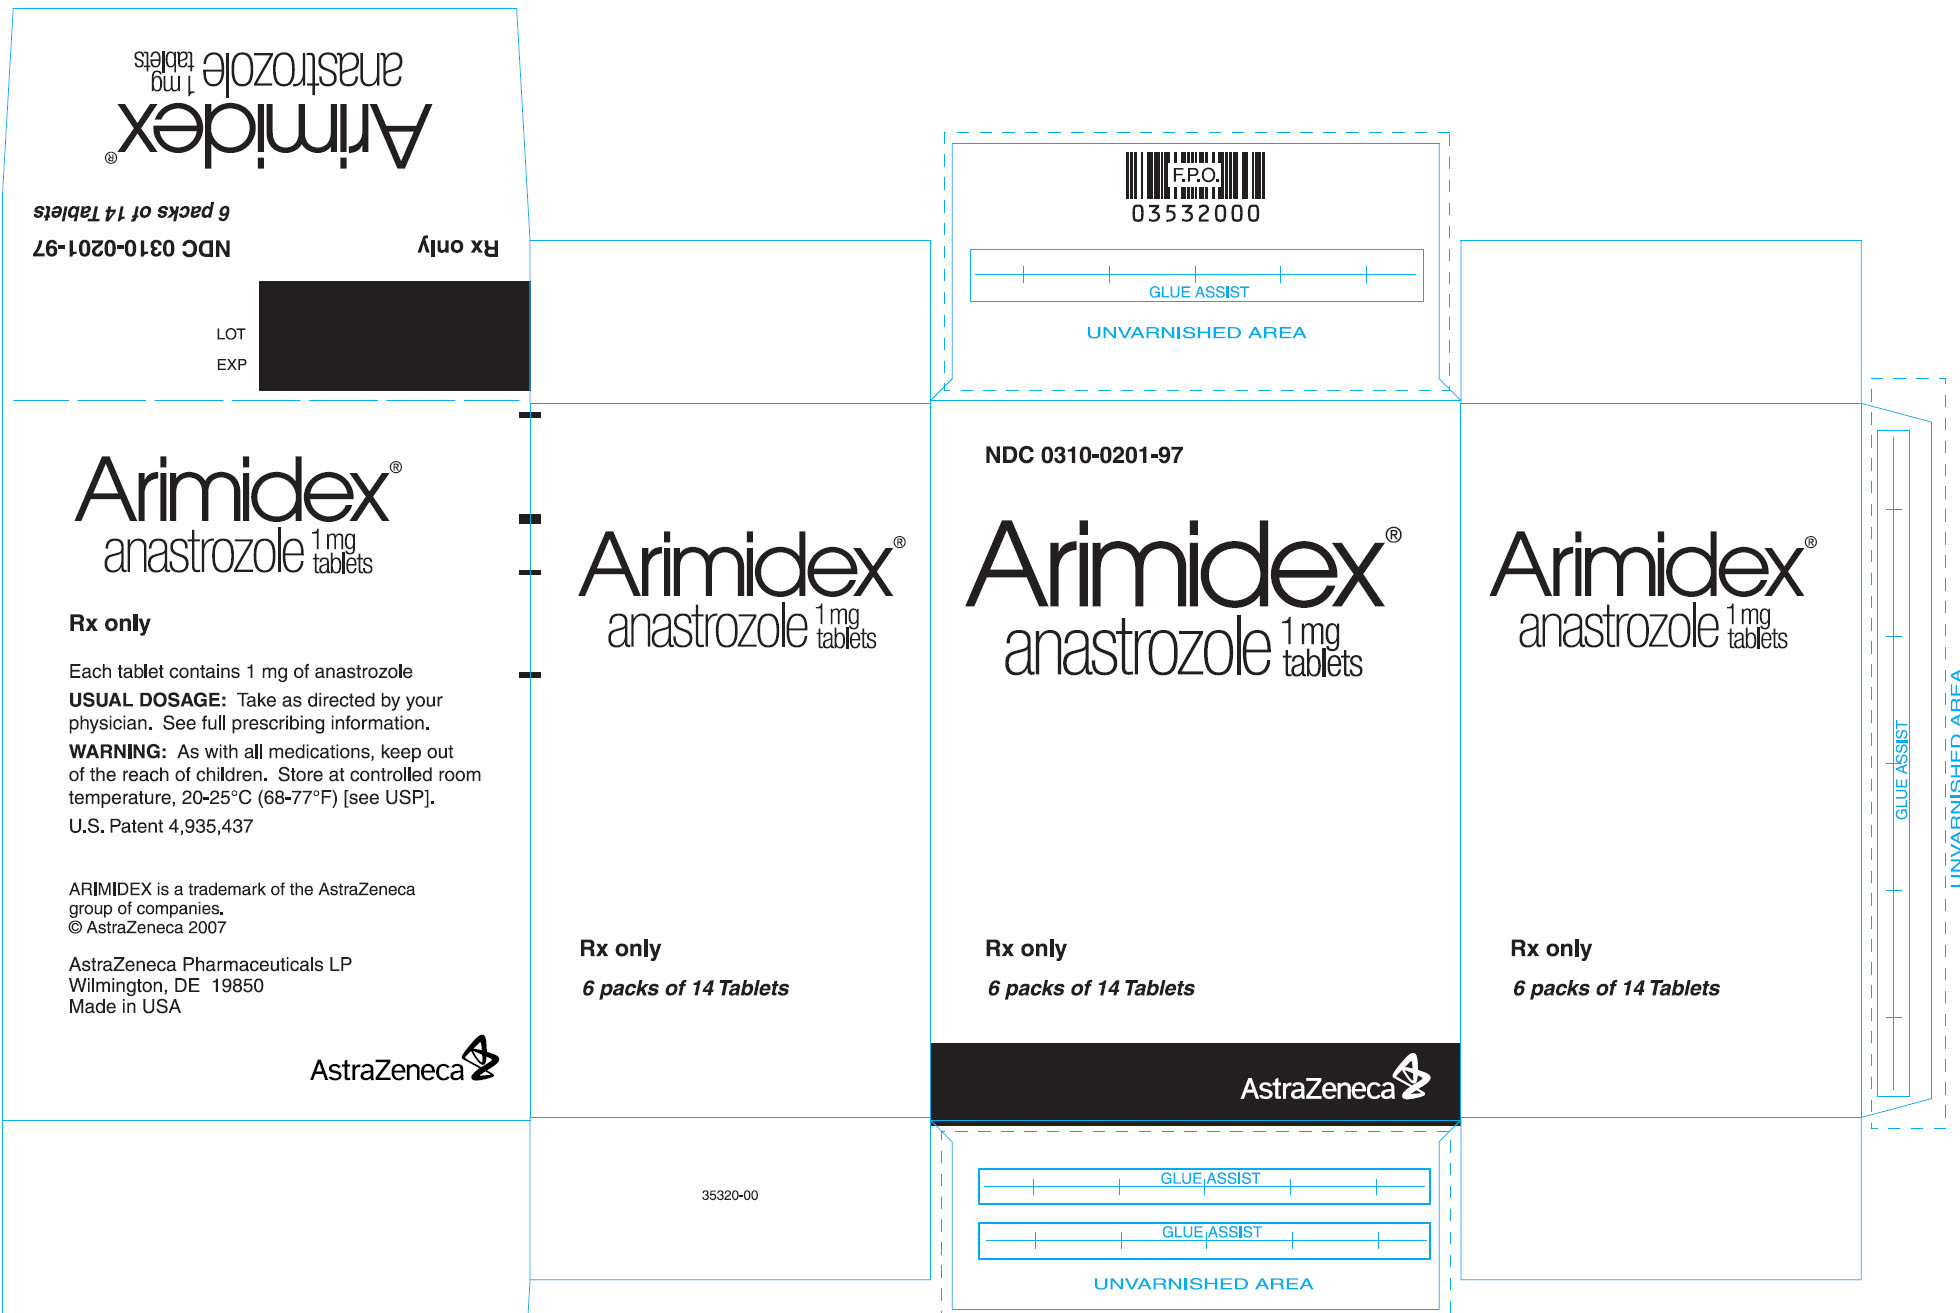 Armidex 1mg - 14 tablet count carton